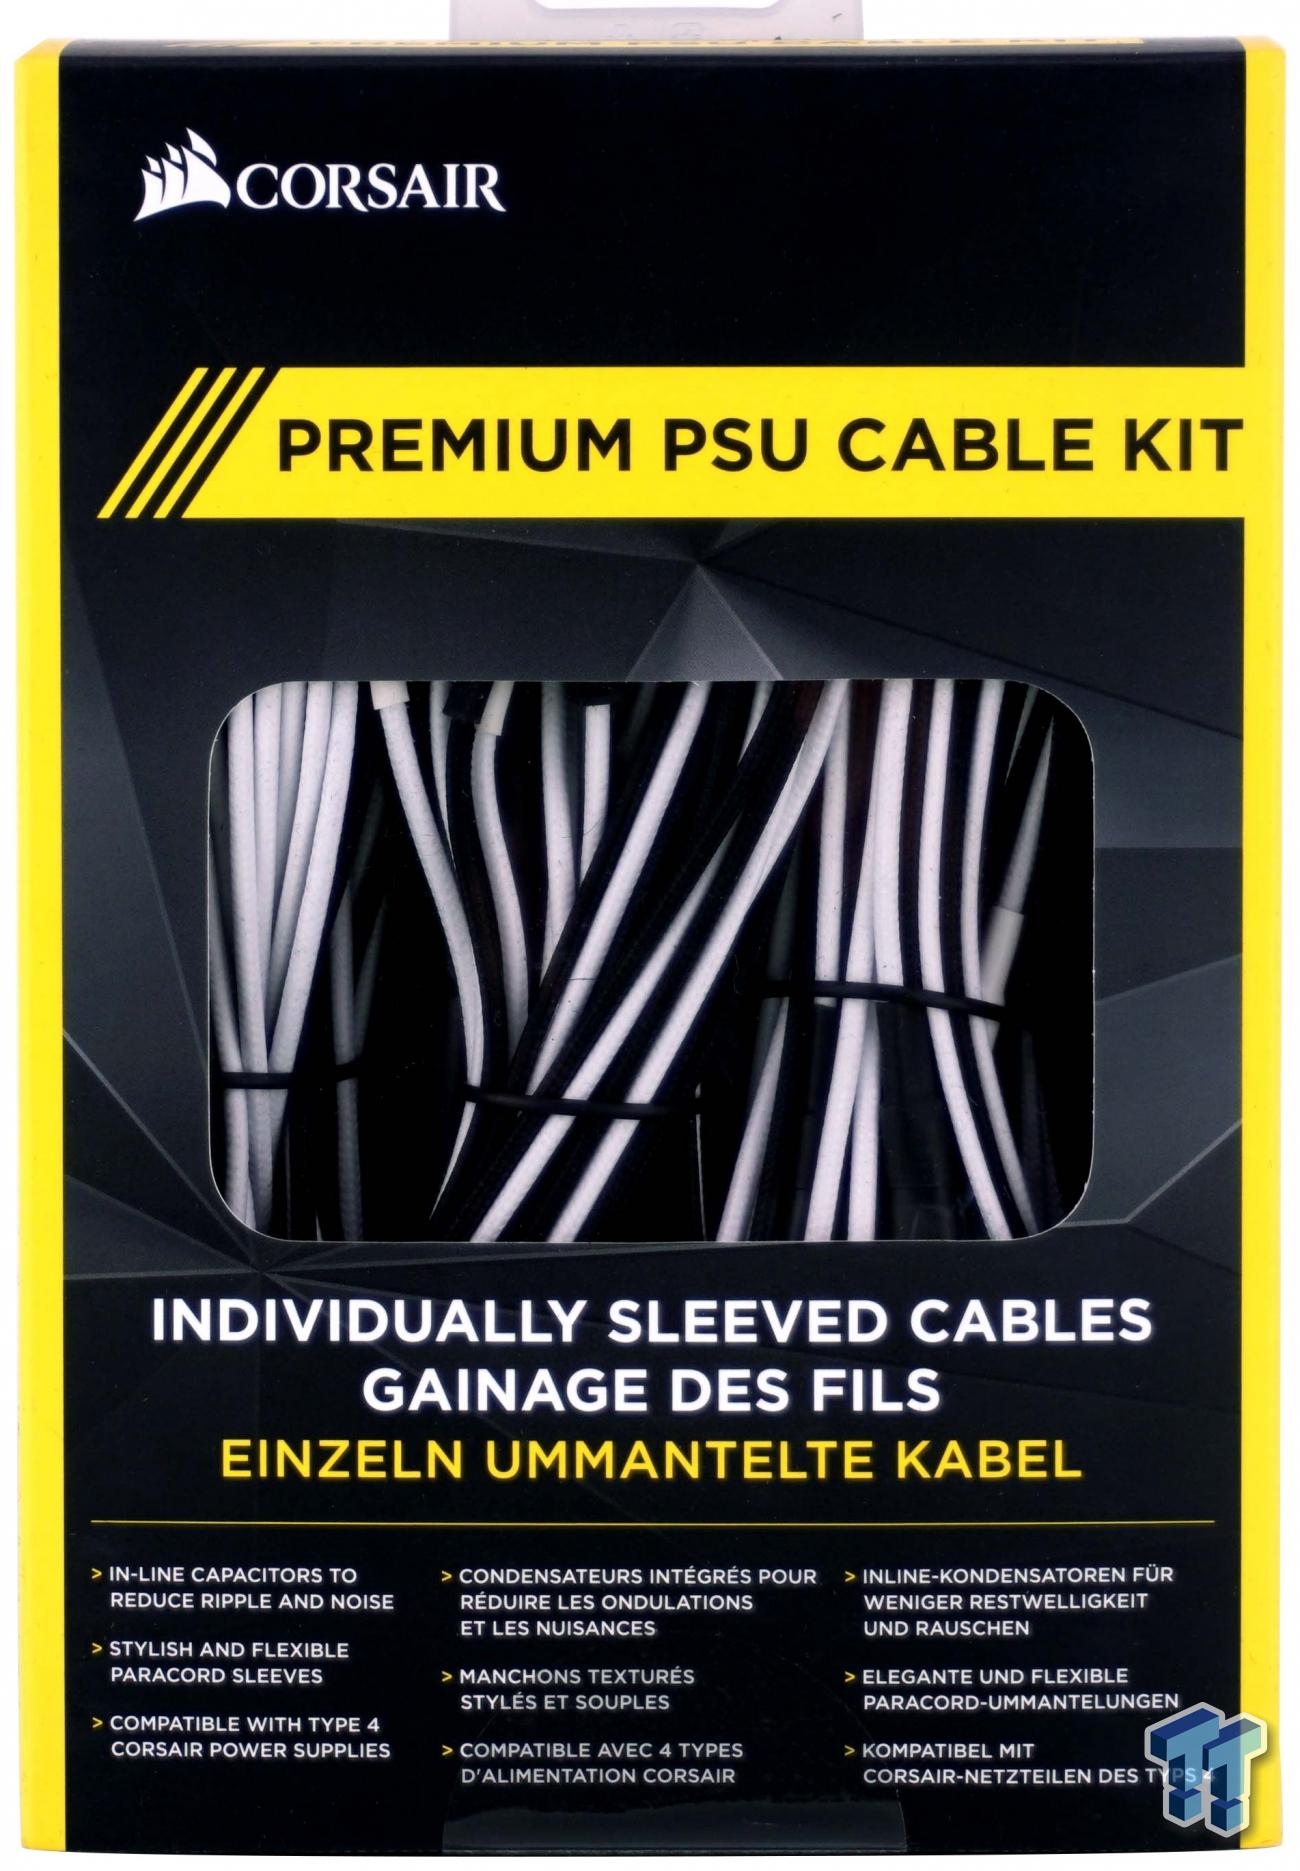 Corsair Premium PSU Cable Review